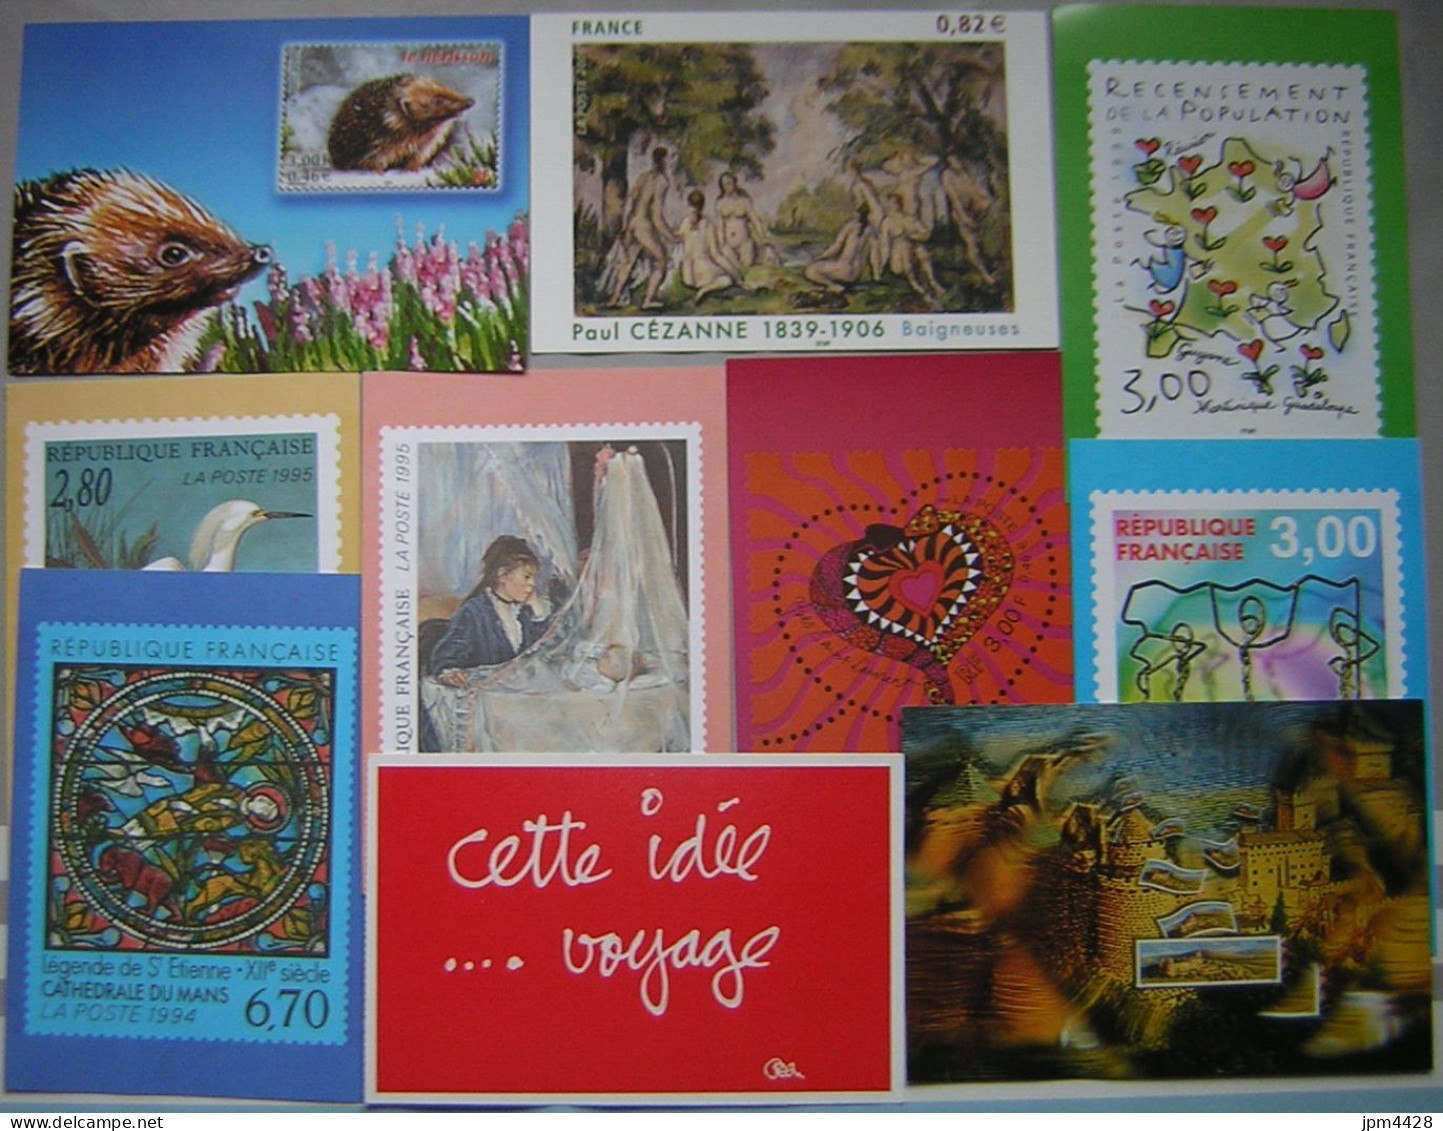 Document La Poste lot de 93 documents dont calendriers semestriels, programme des émissions de timbres - Cartes diverses